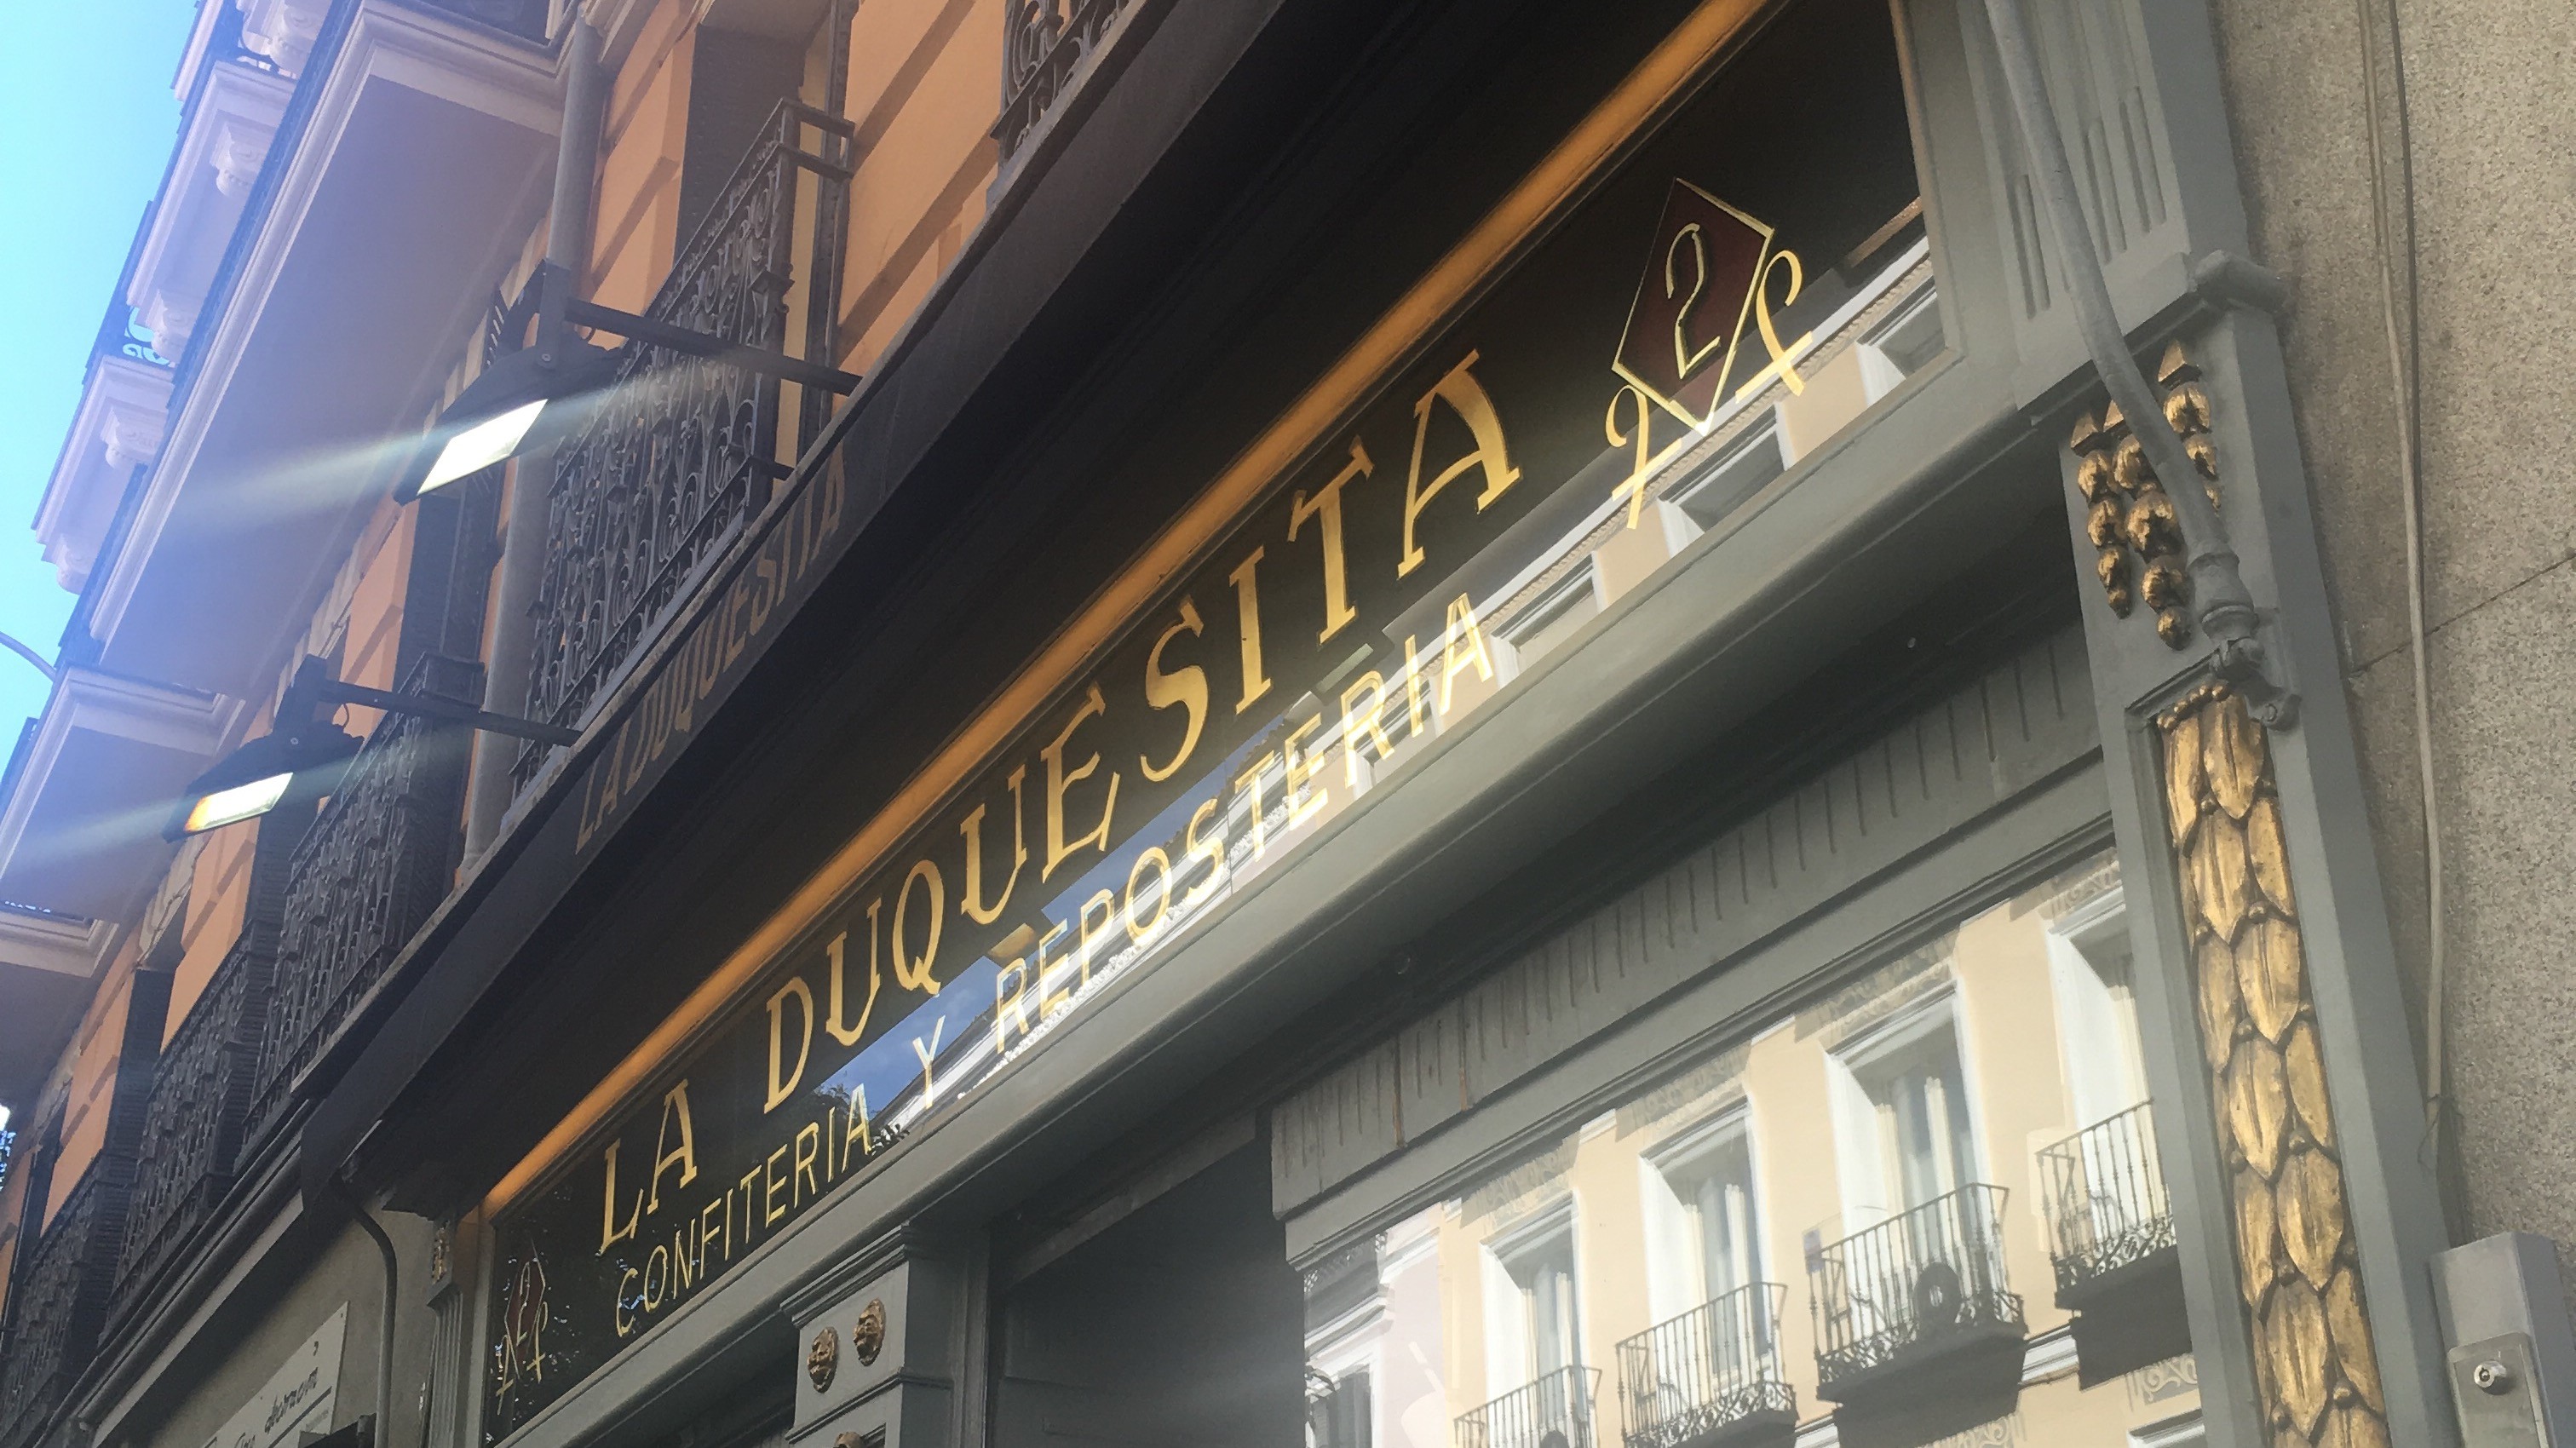 La Duquesita, Confectionery shop, Madrid, Spain